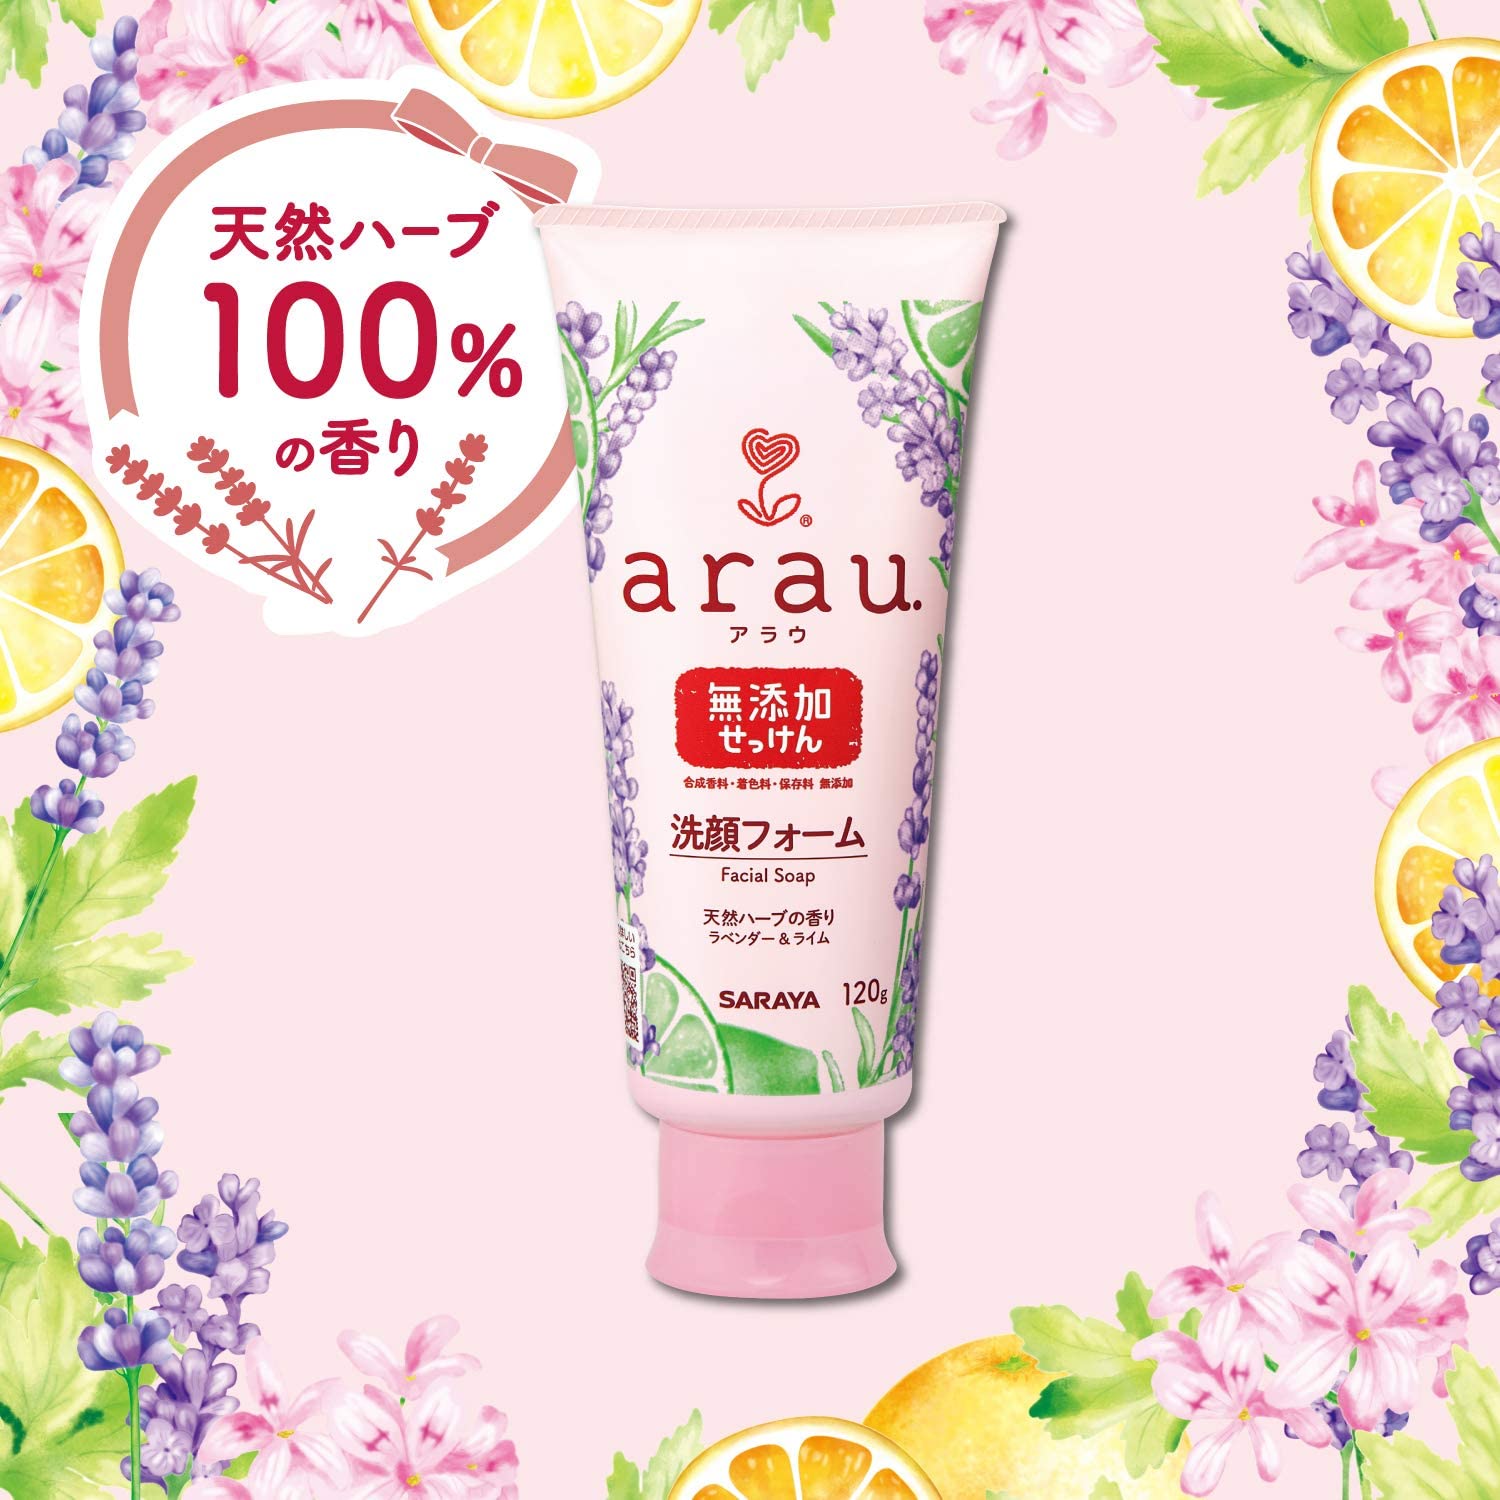 Saraya Arau Chemical Free Face Wash for Sensitive Skin 120g